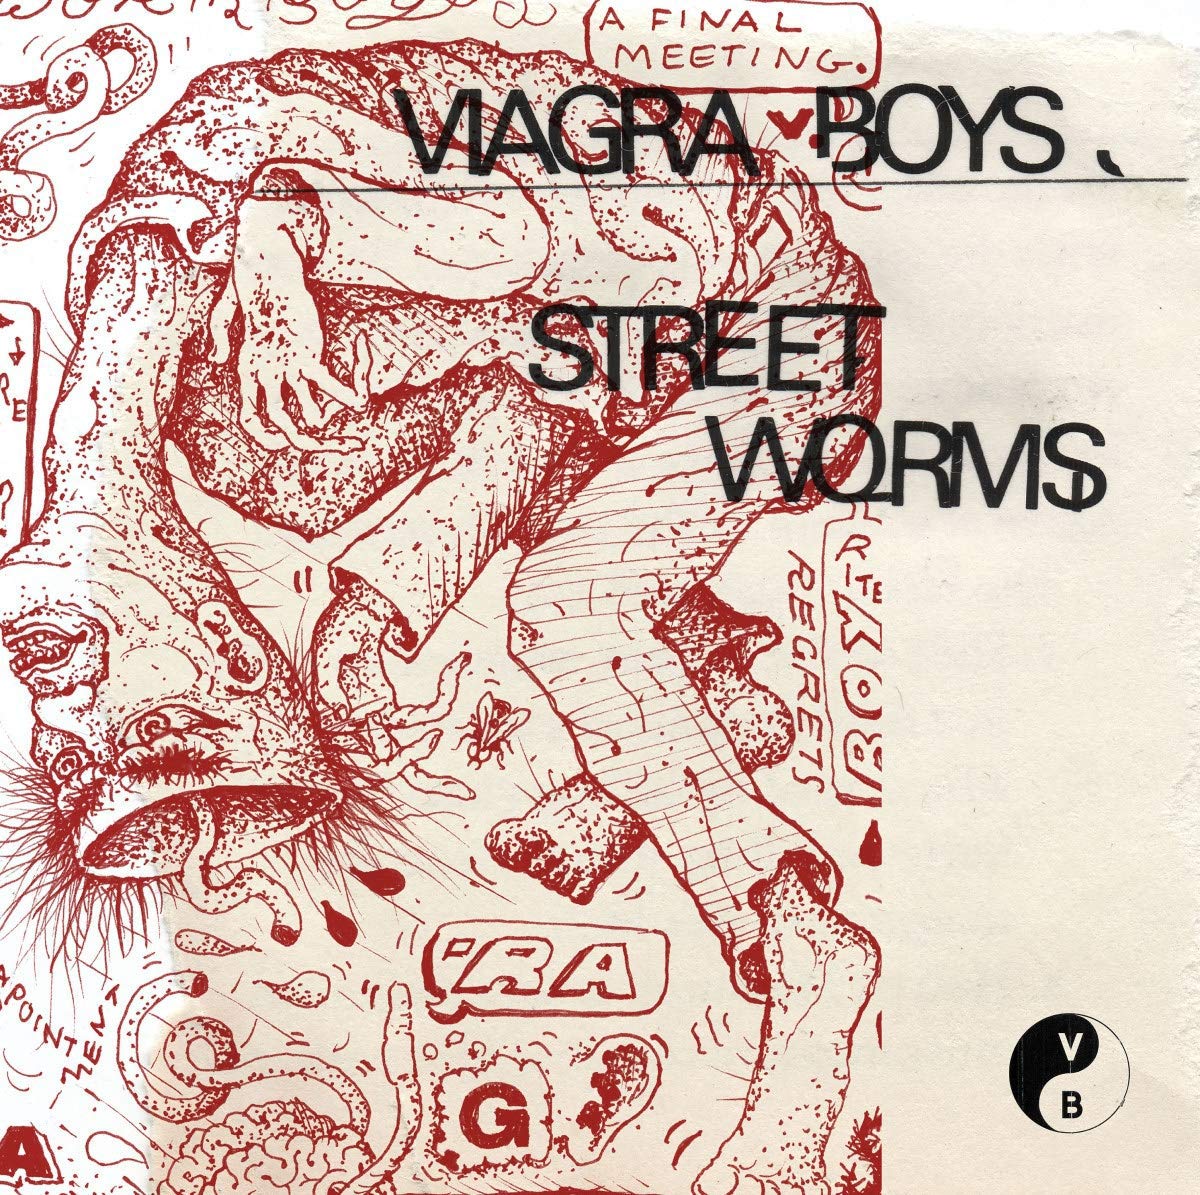 Viagra Boys Street Worms